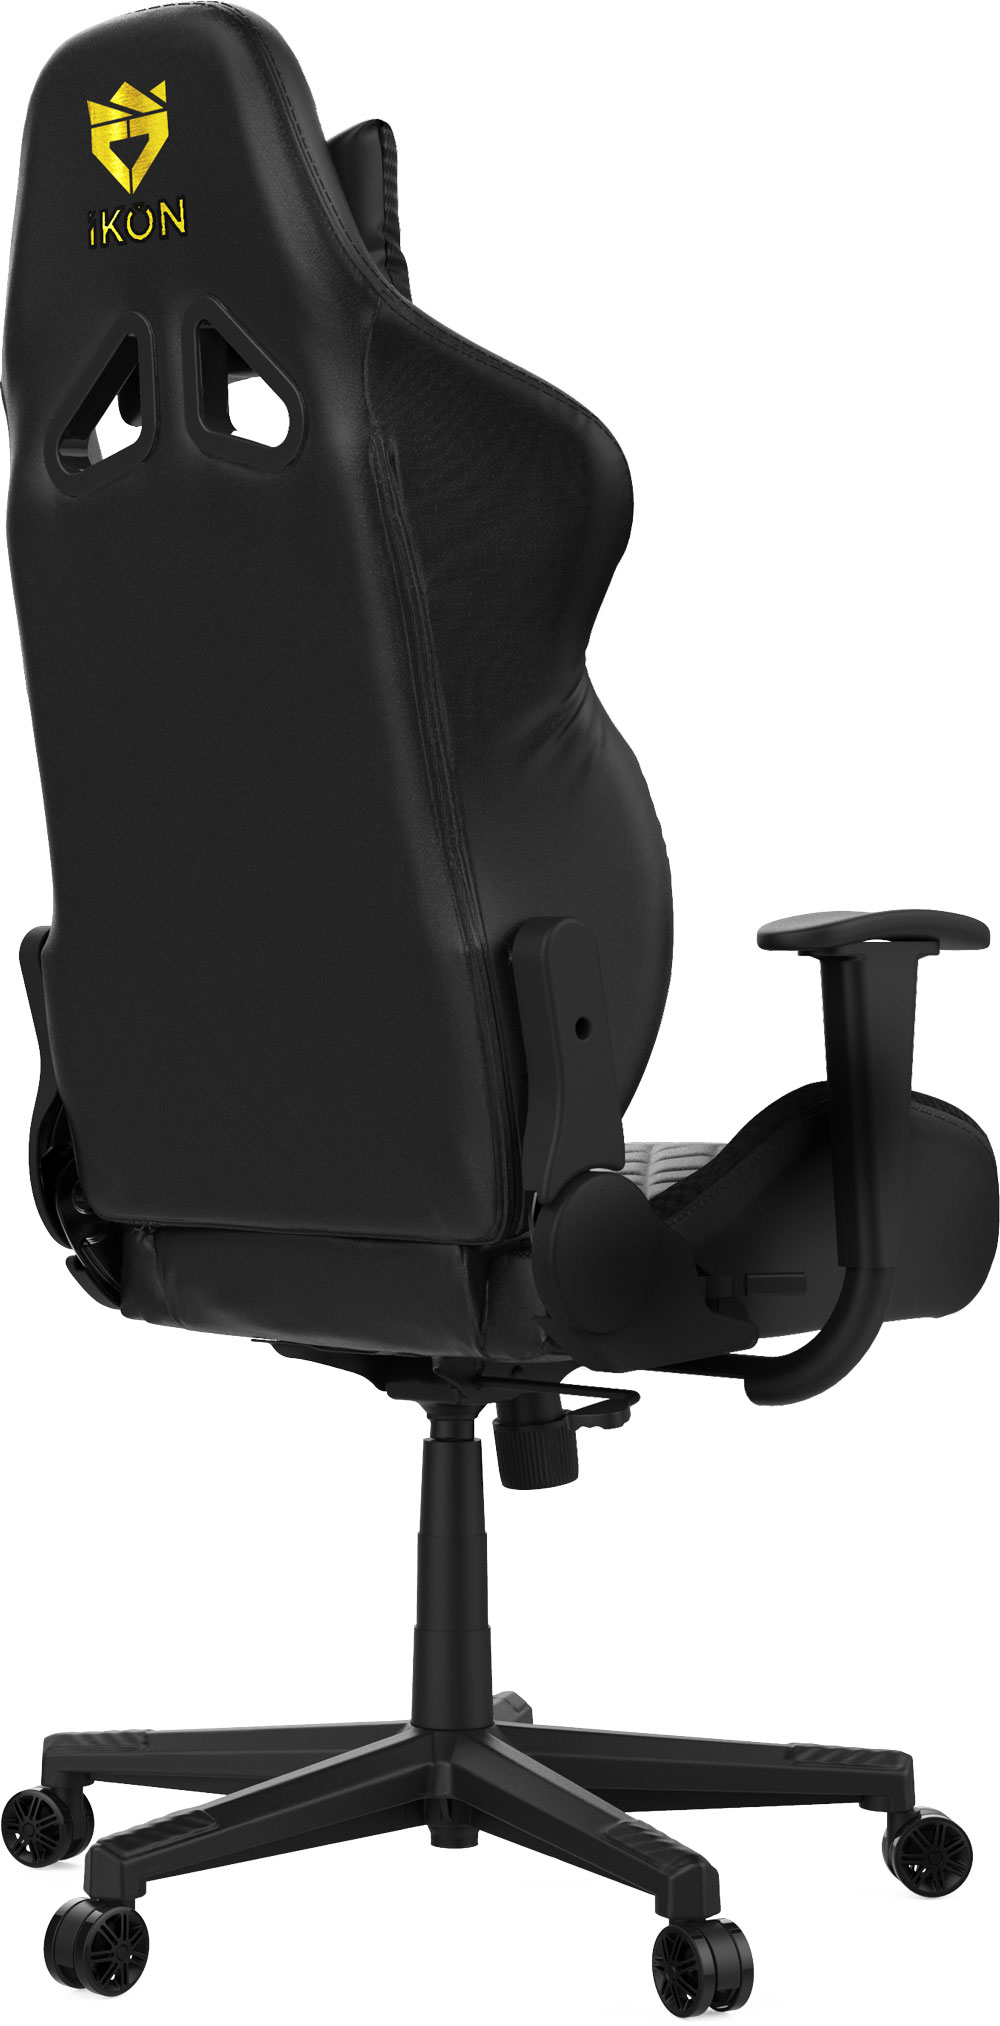 Evetech IKon-Shift-300 Gaming Chair - Black